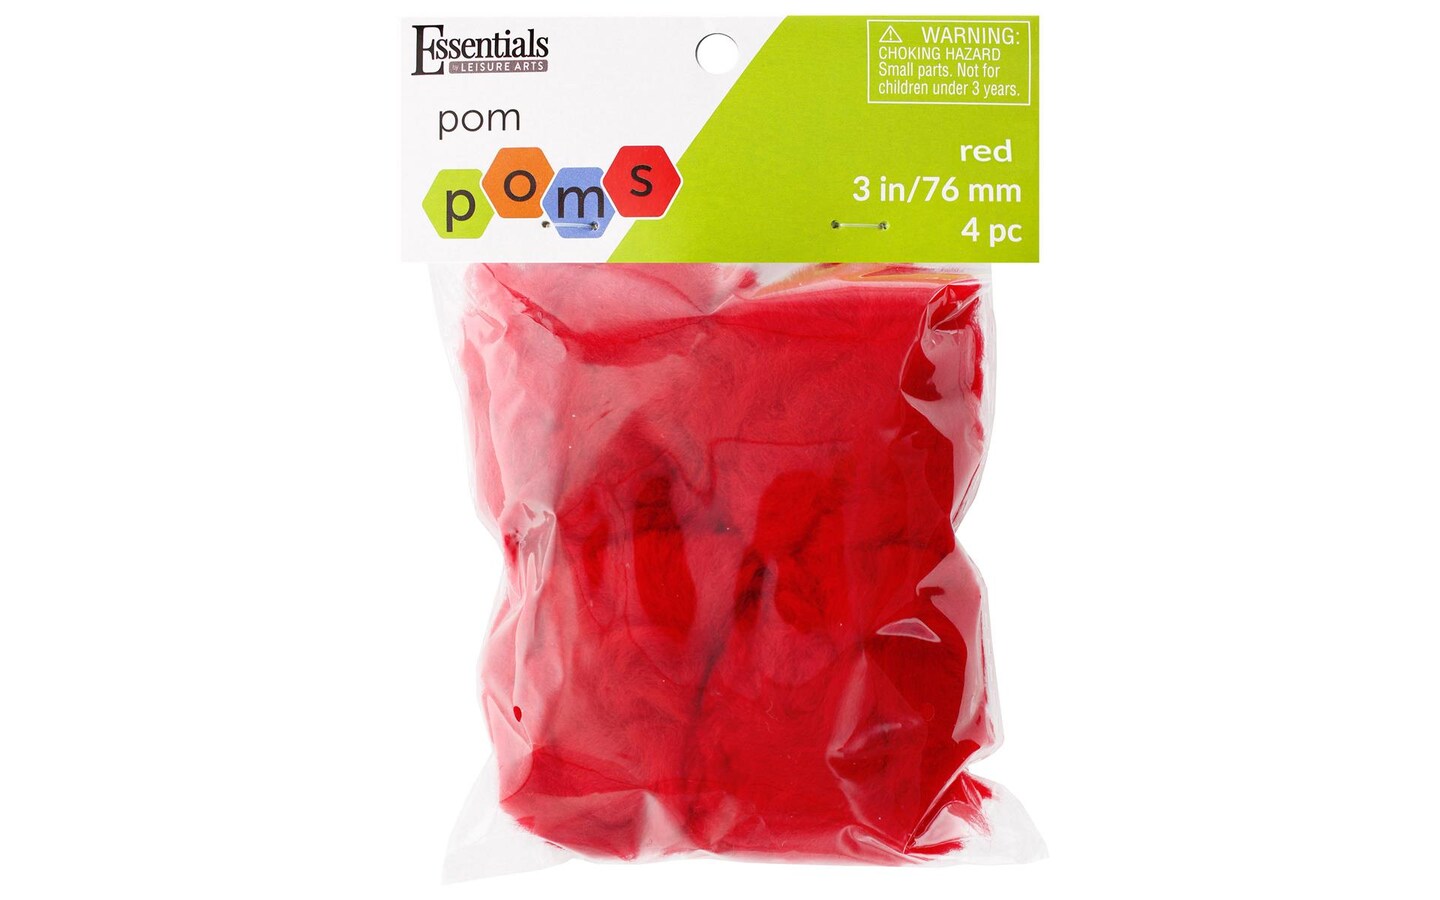  Essentials by Leisure Arts Pom Poms - Multi-Colored -1